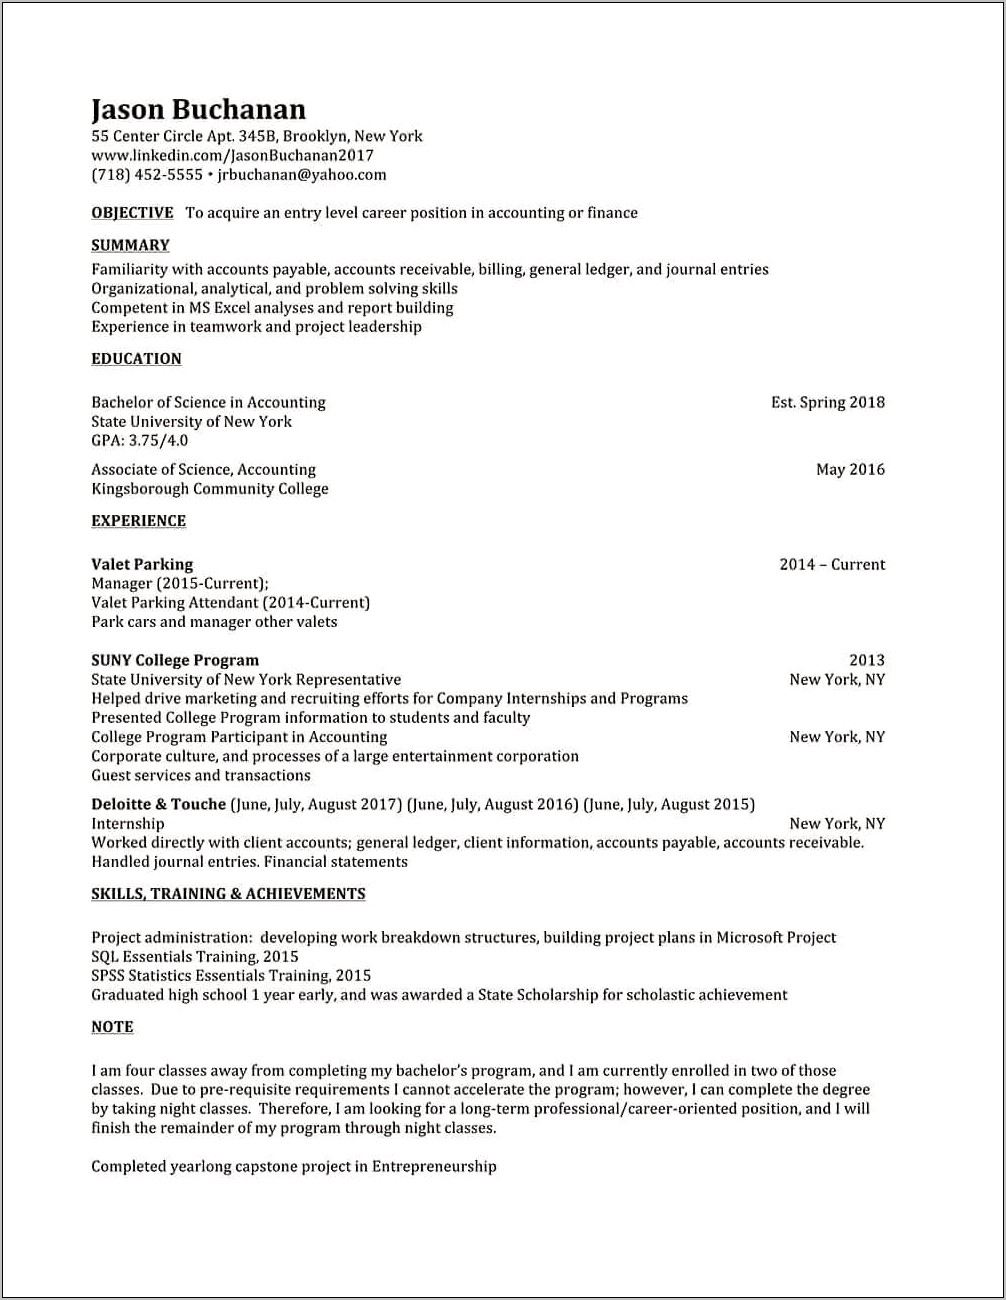 Resume Help Me Find A Job